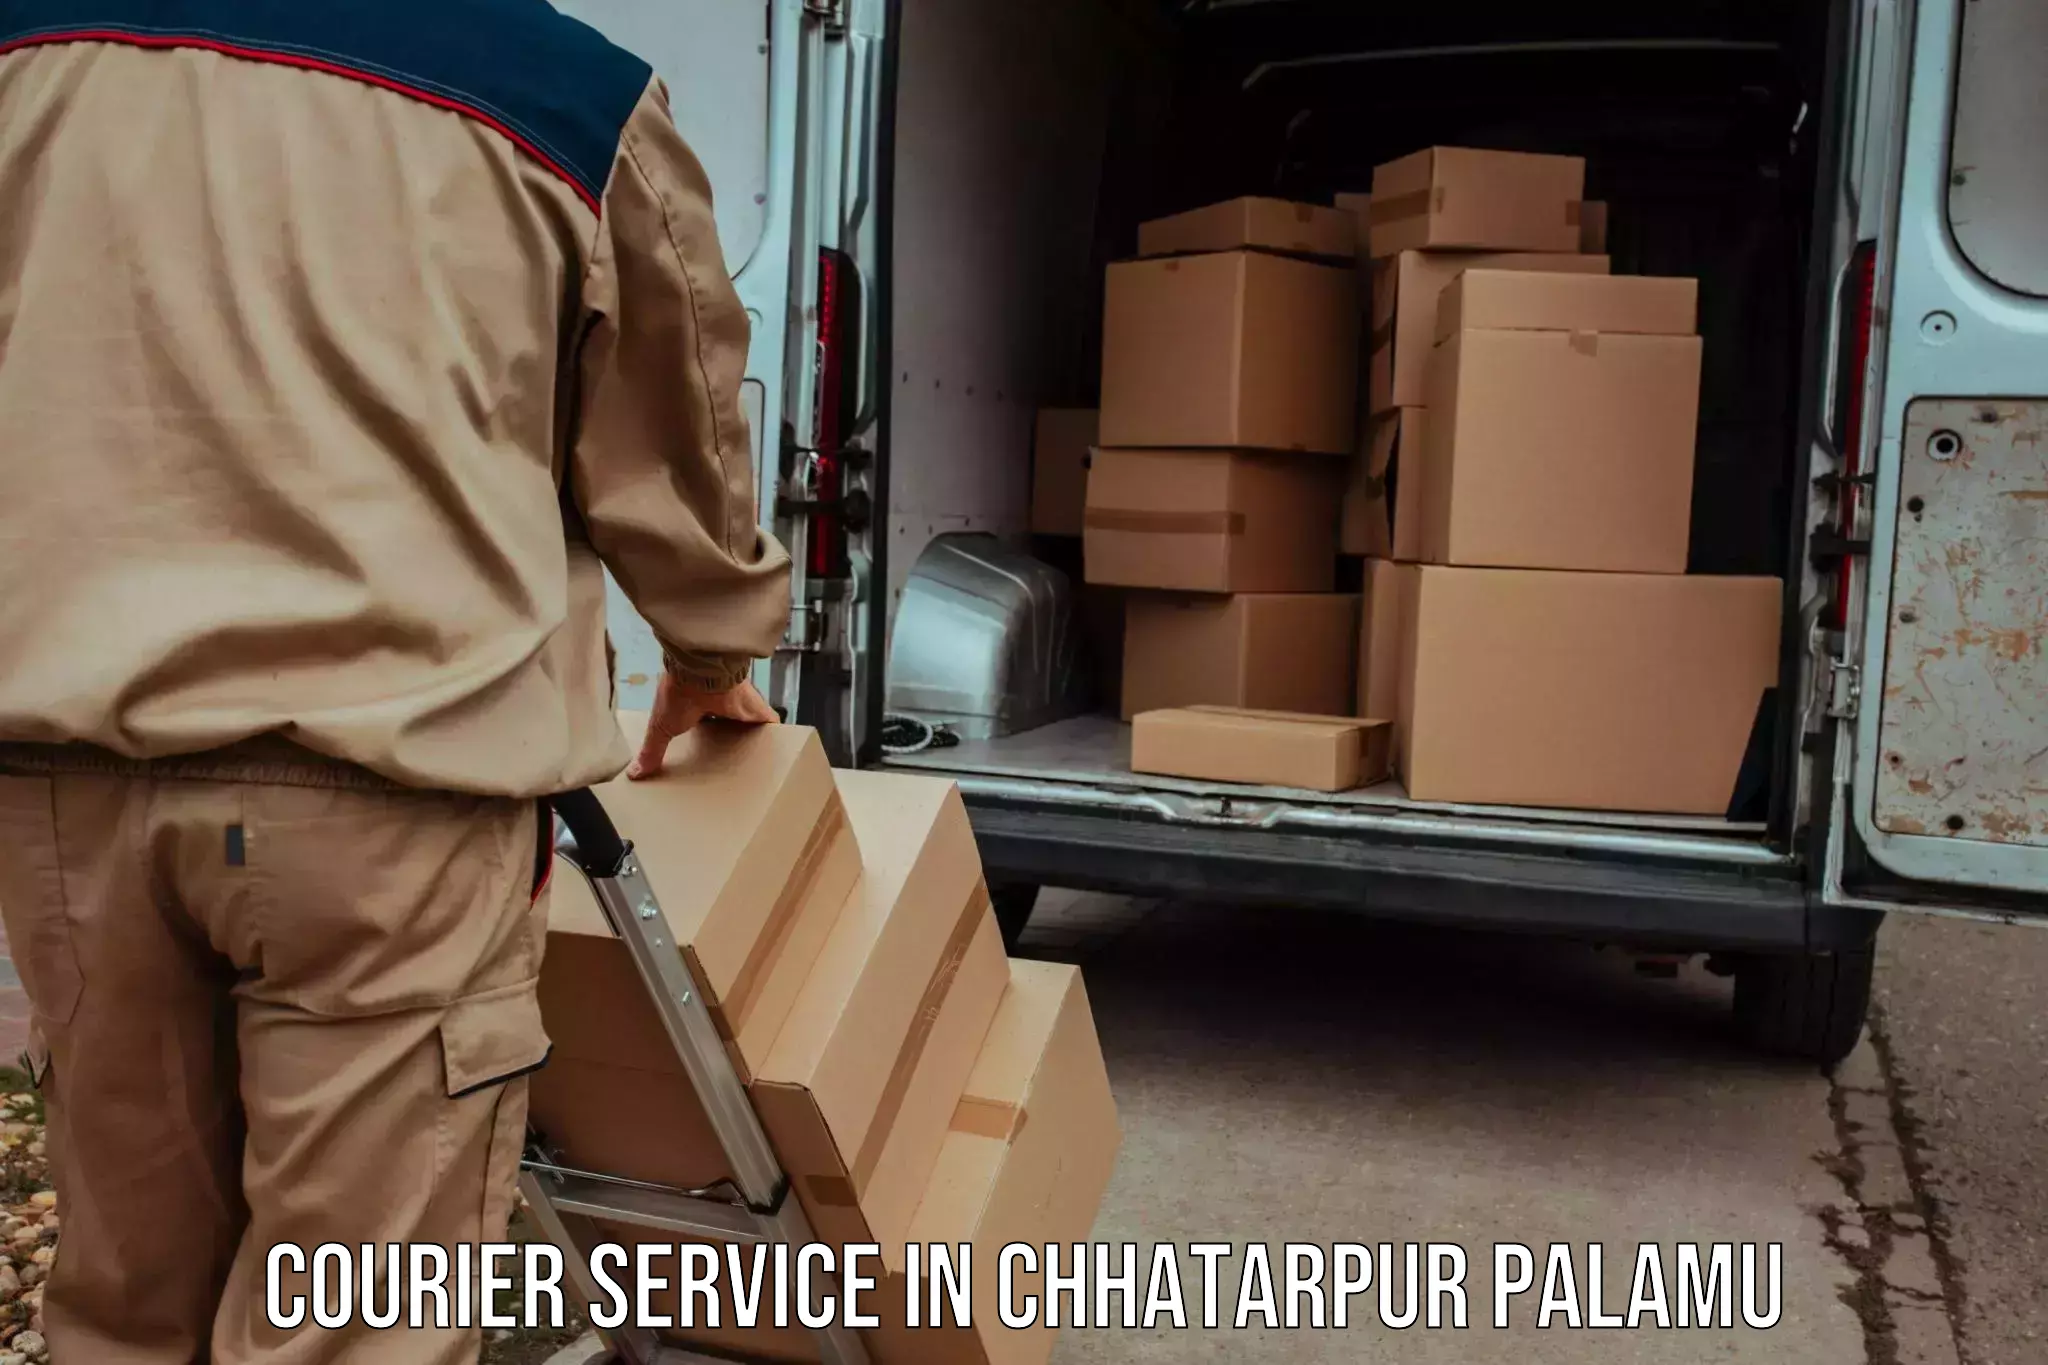 Overnight delivery in Chhatarpur Palamu